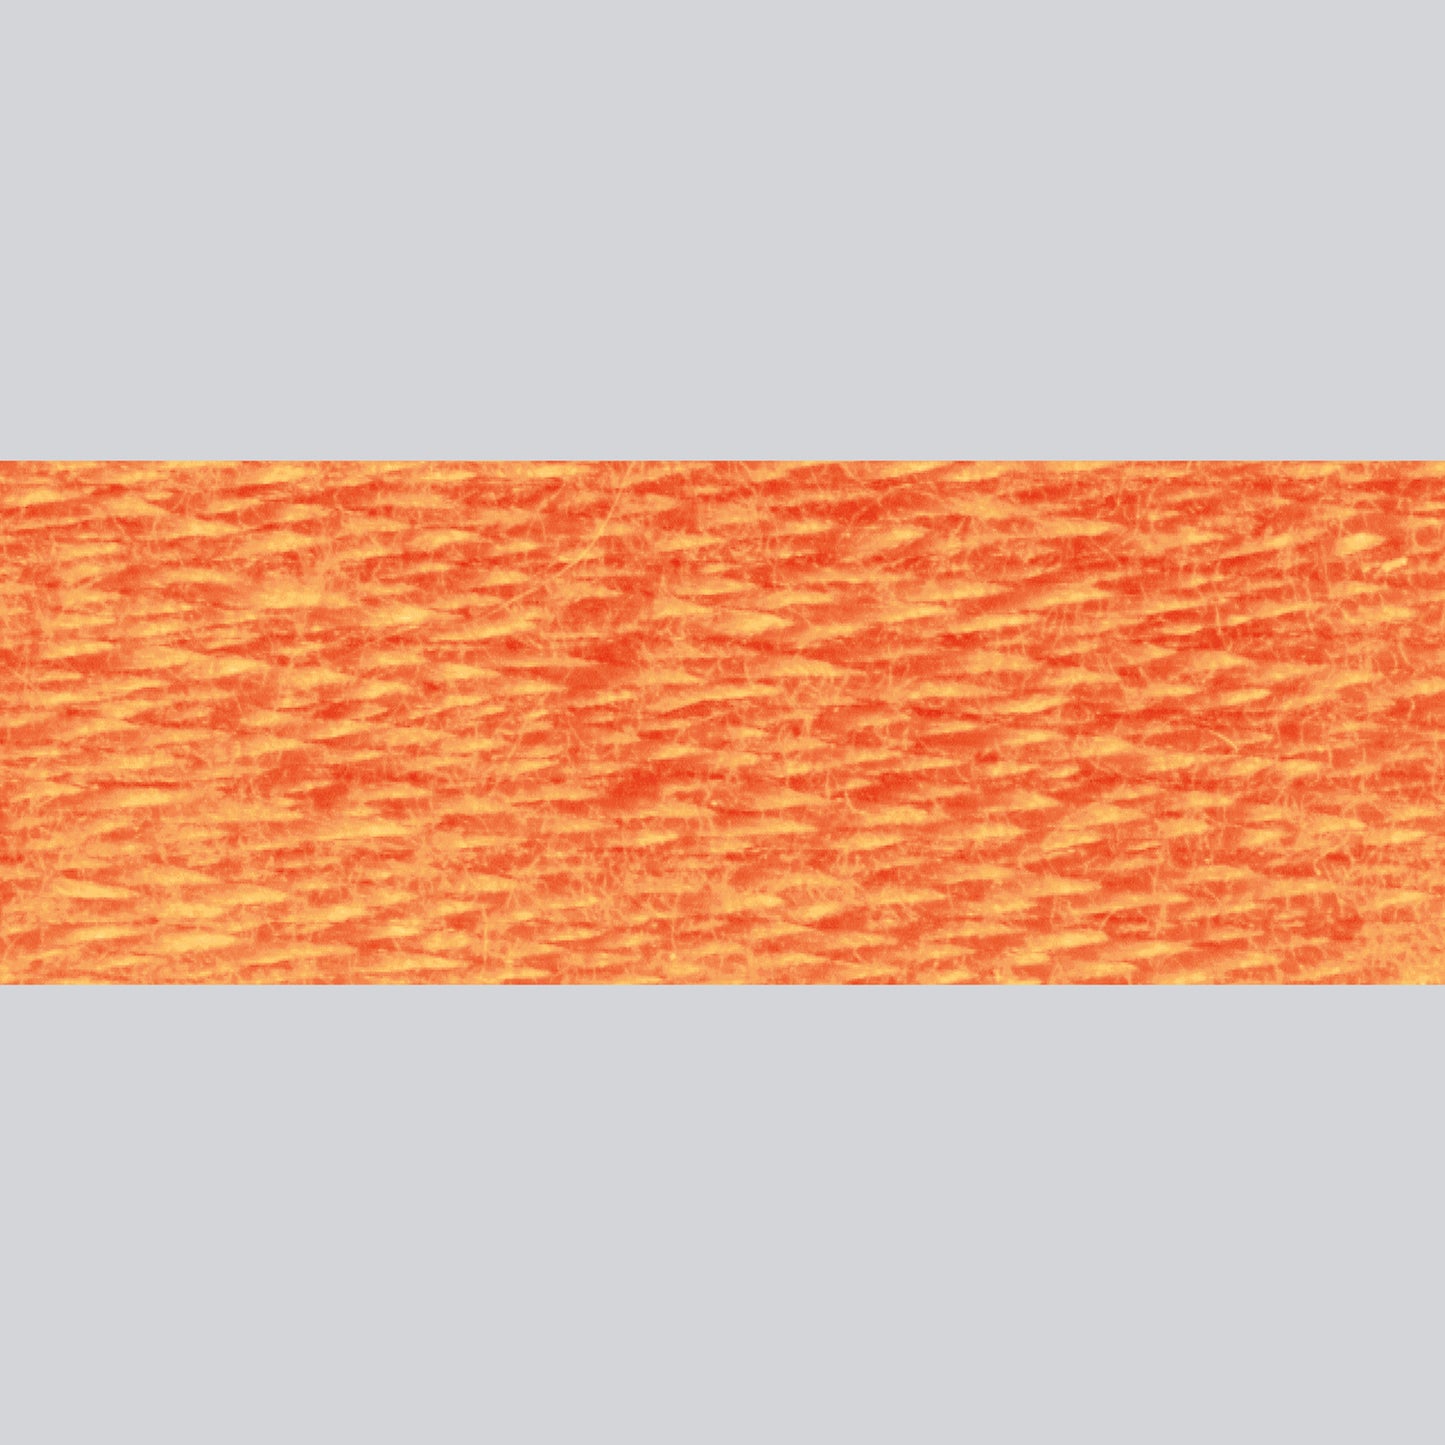 DMC Embroidery Floss - 922 Light Copper Alternative View #1